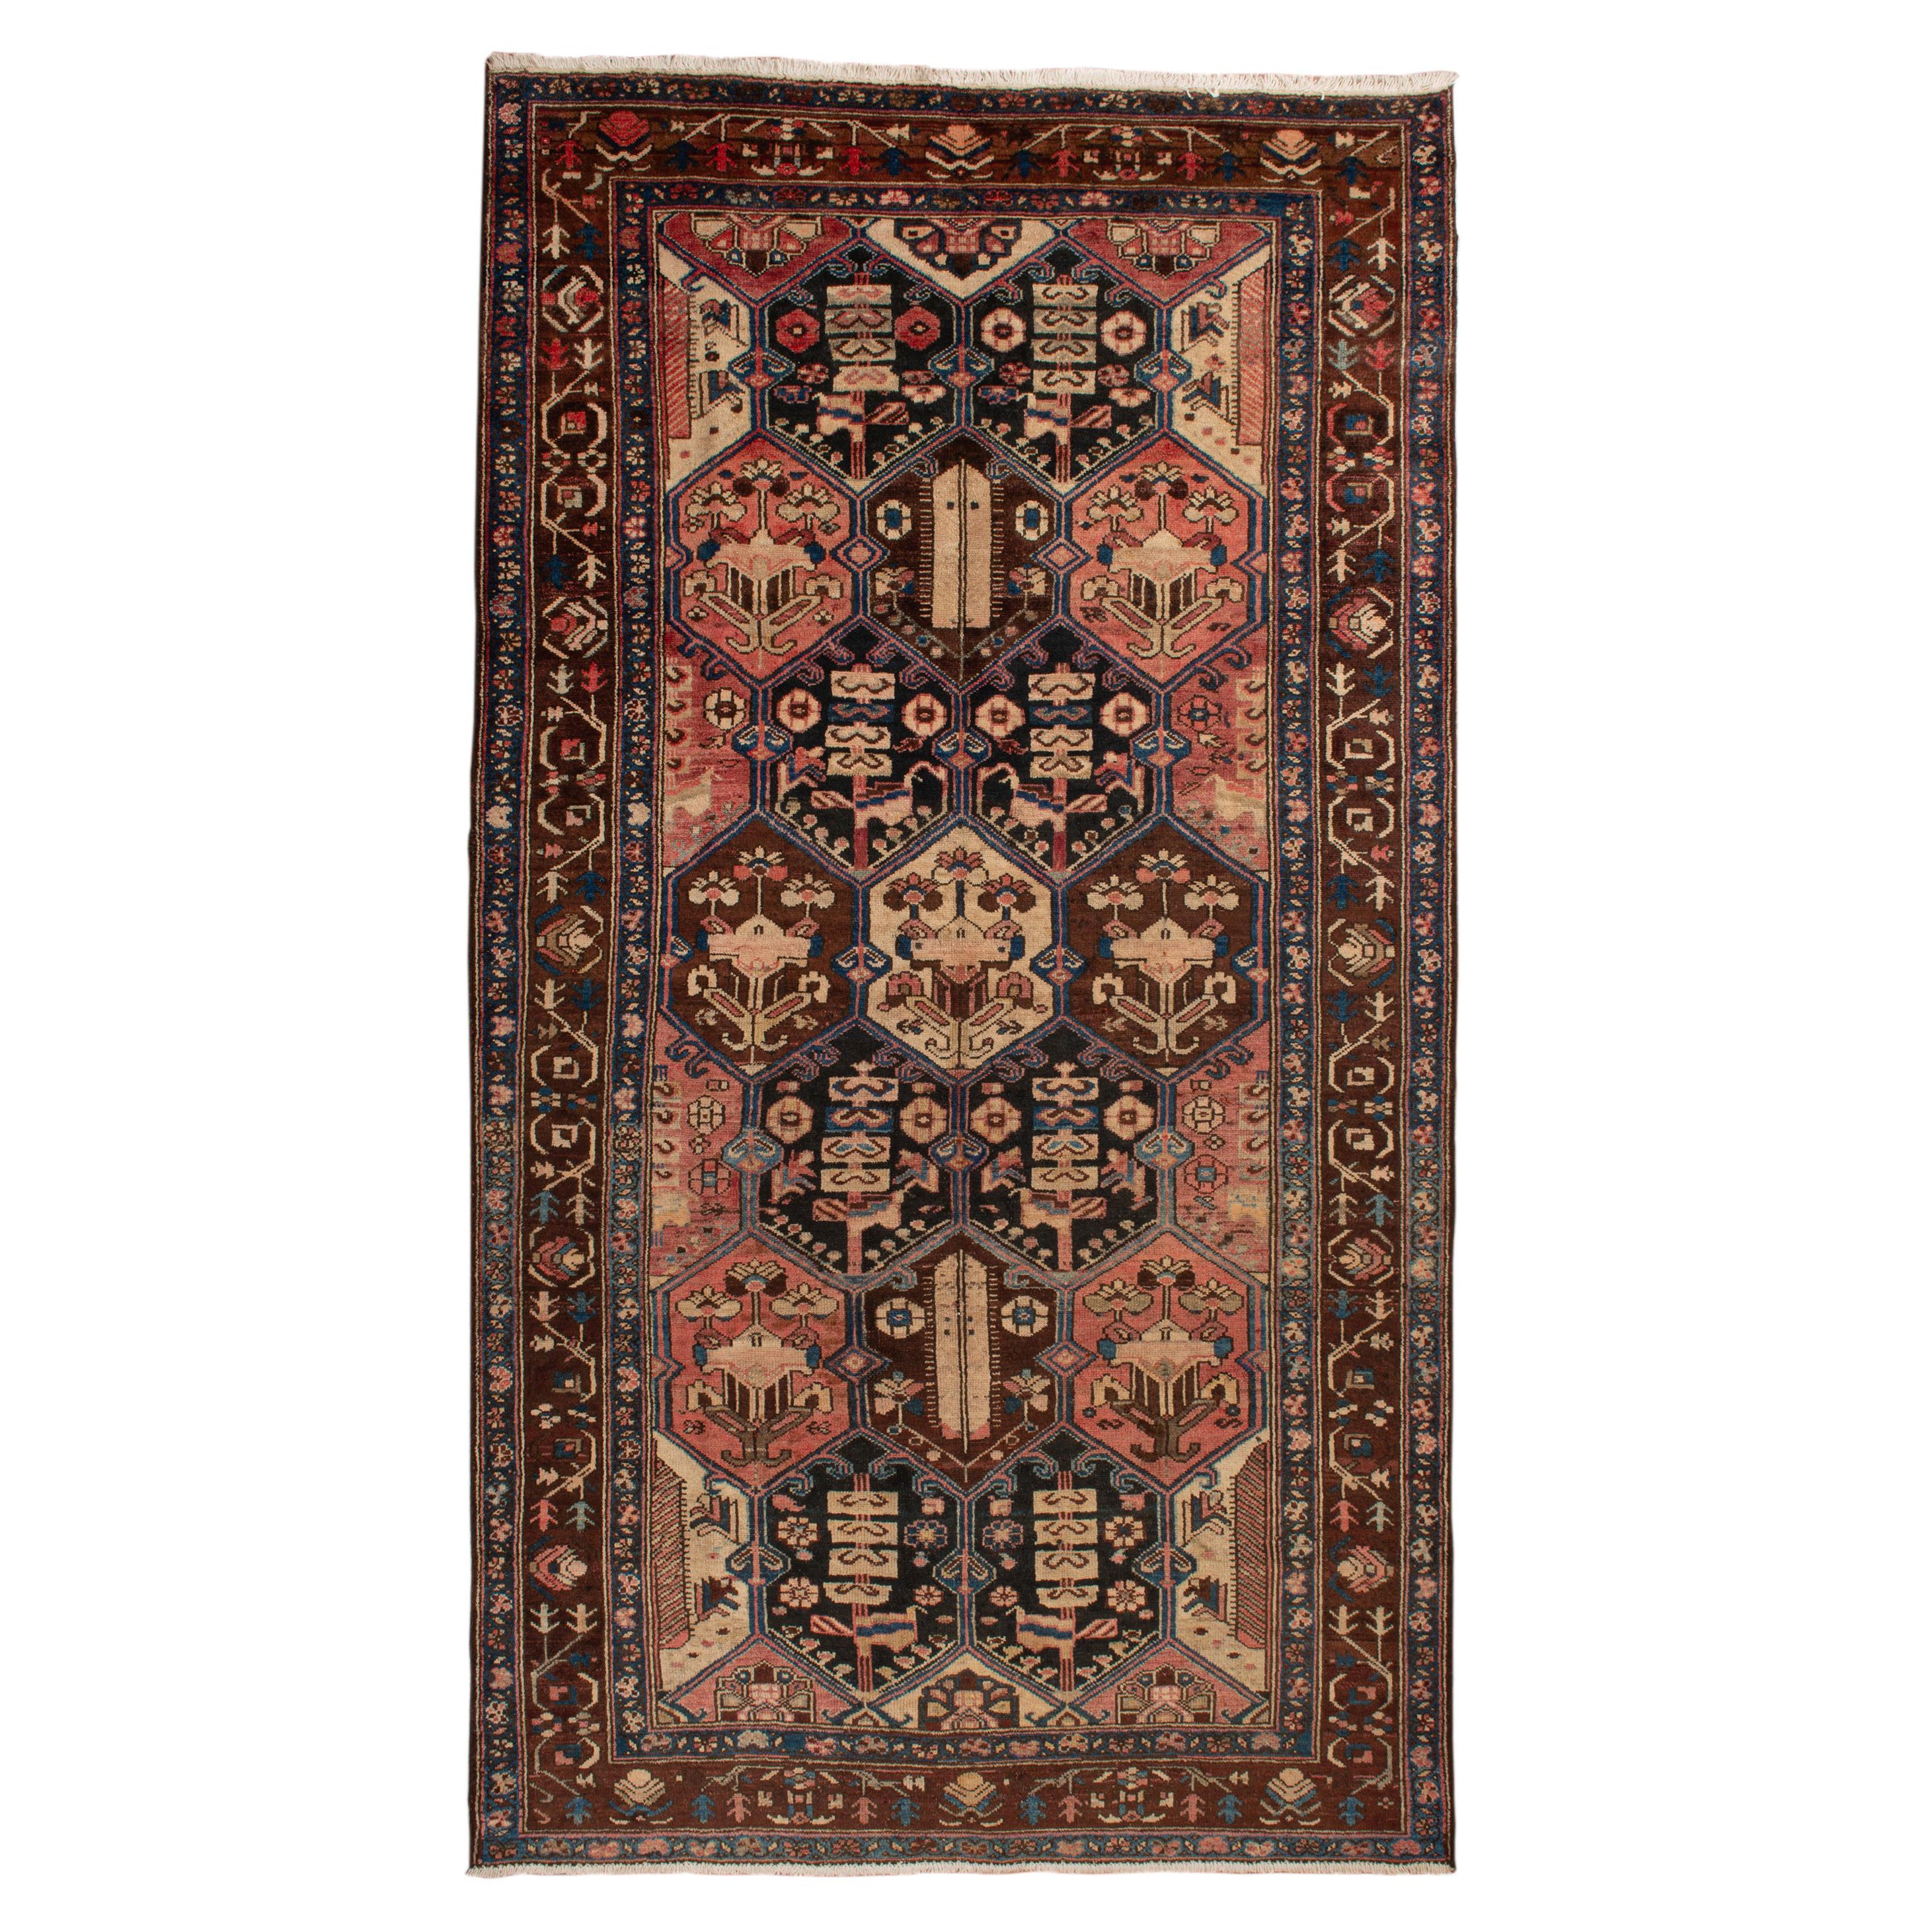 Old Armenian Carpet or Rug For Sale